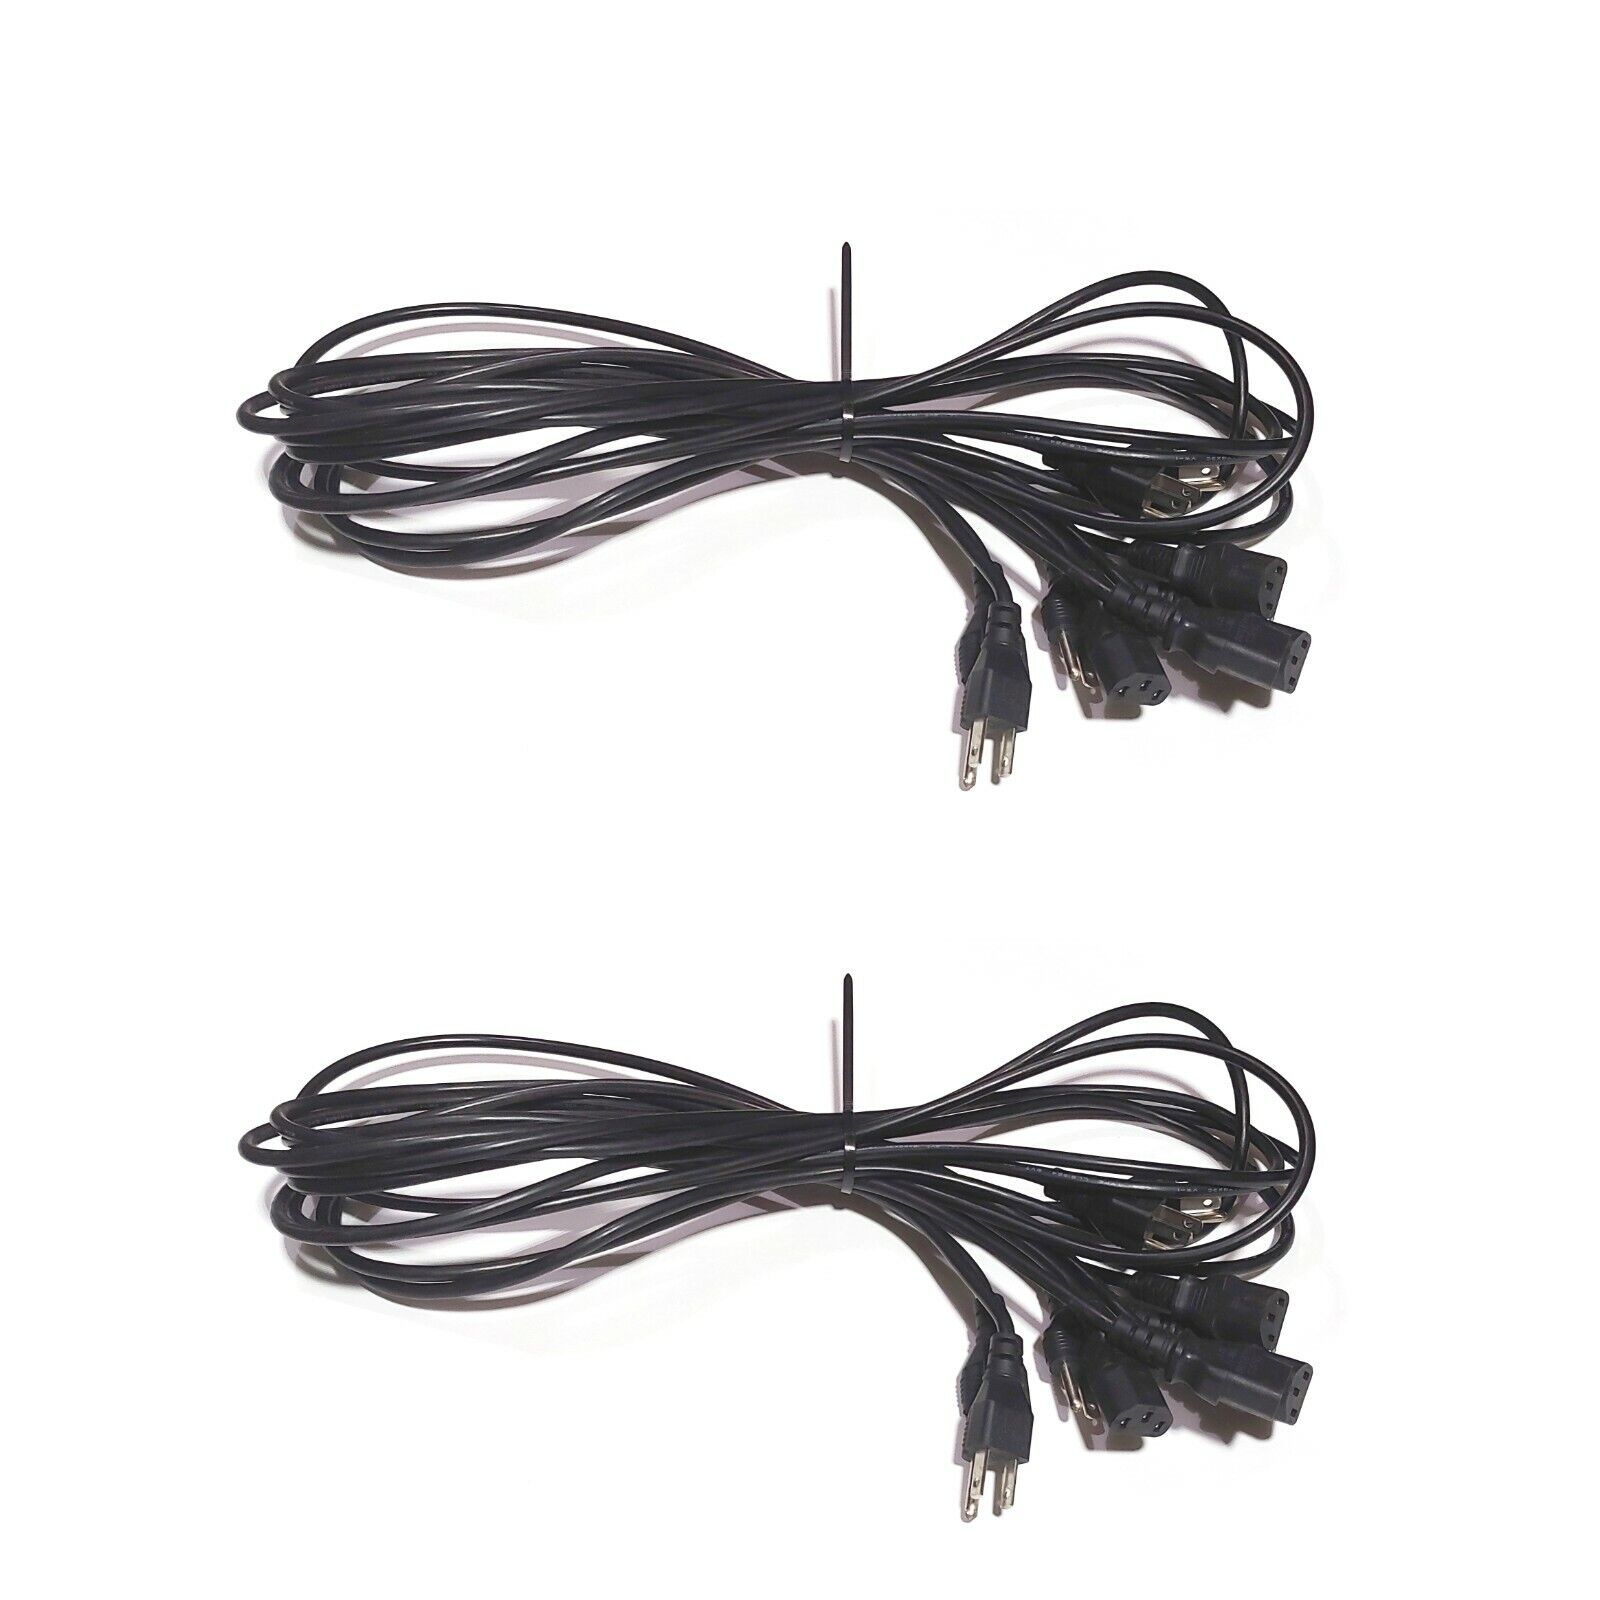 Isheng (Qty 10) AC Computer Power Cable 3-Pin/Prong 6 Feet NEMA 5-15P to IEC C13